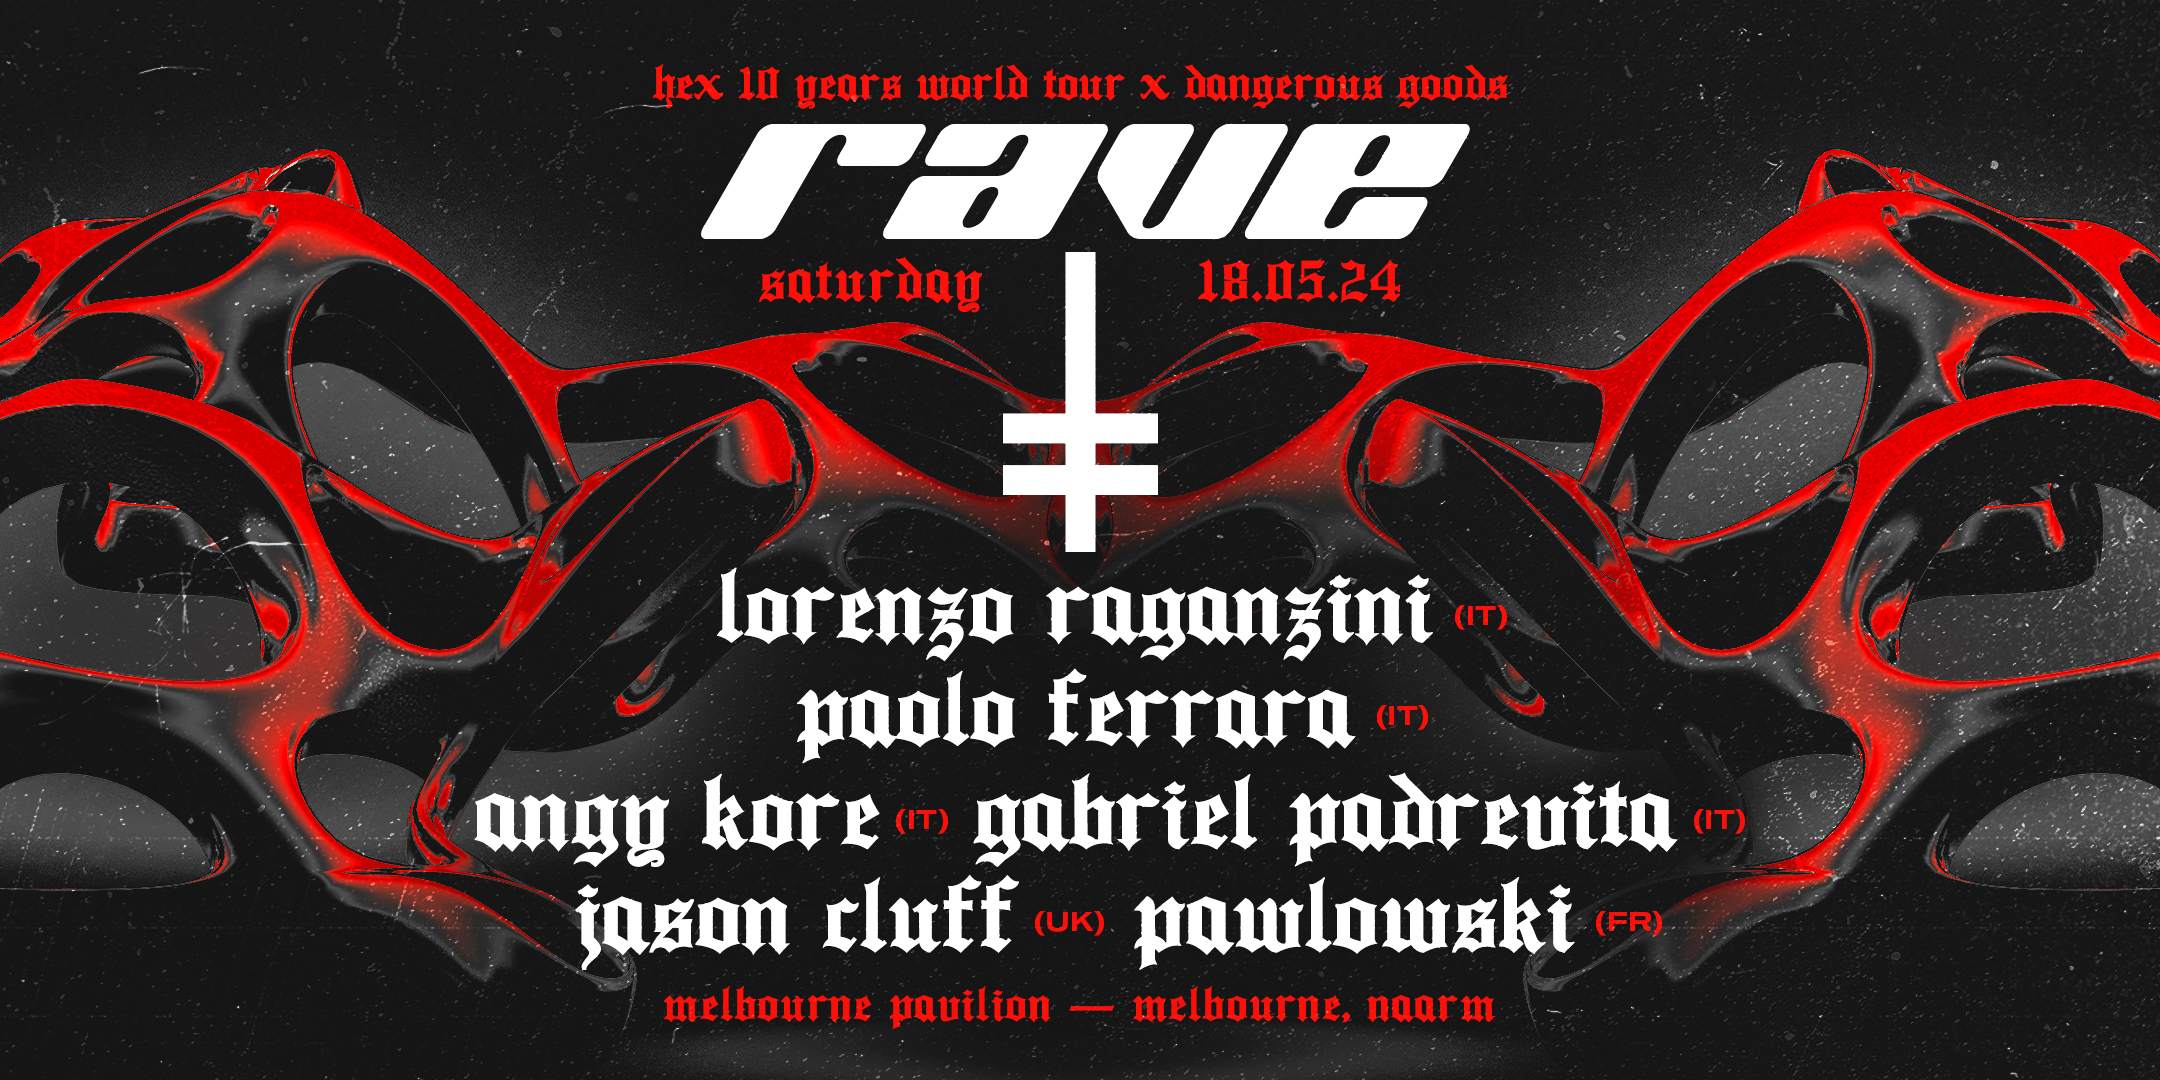 Dangerous Goods presents: RAVE x HEX 10YR World Tour - Página frontal